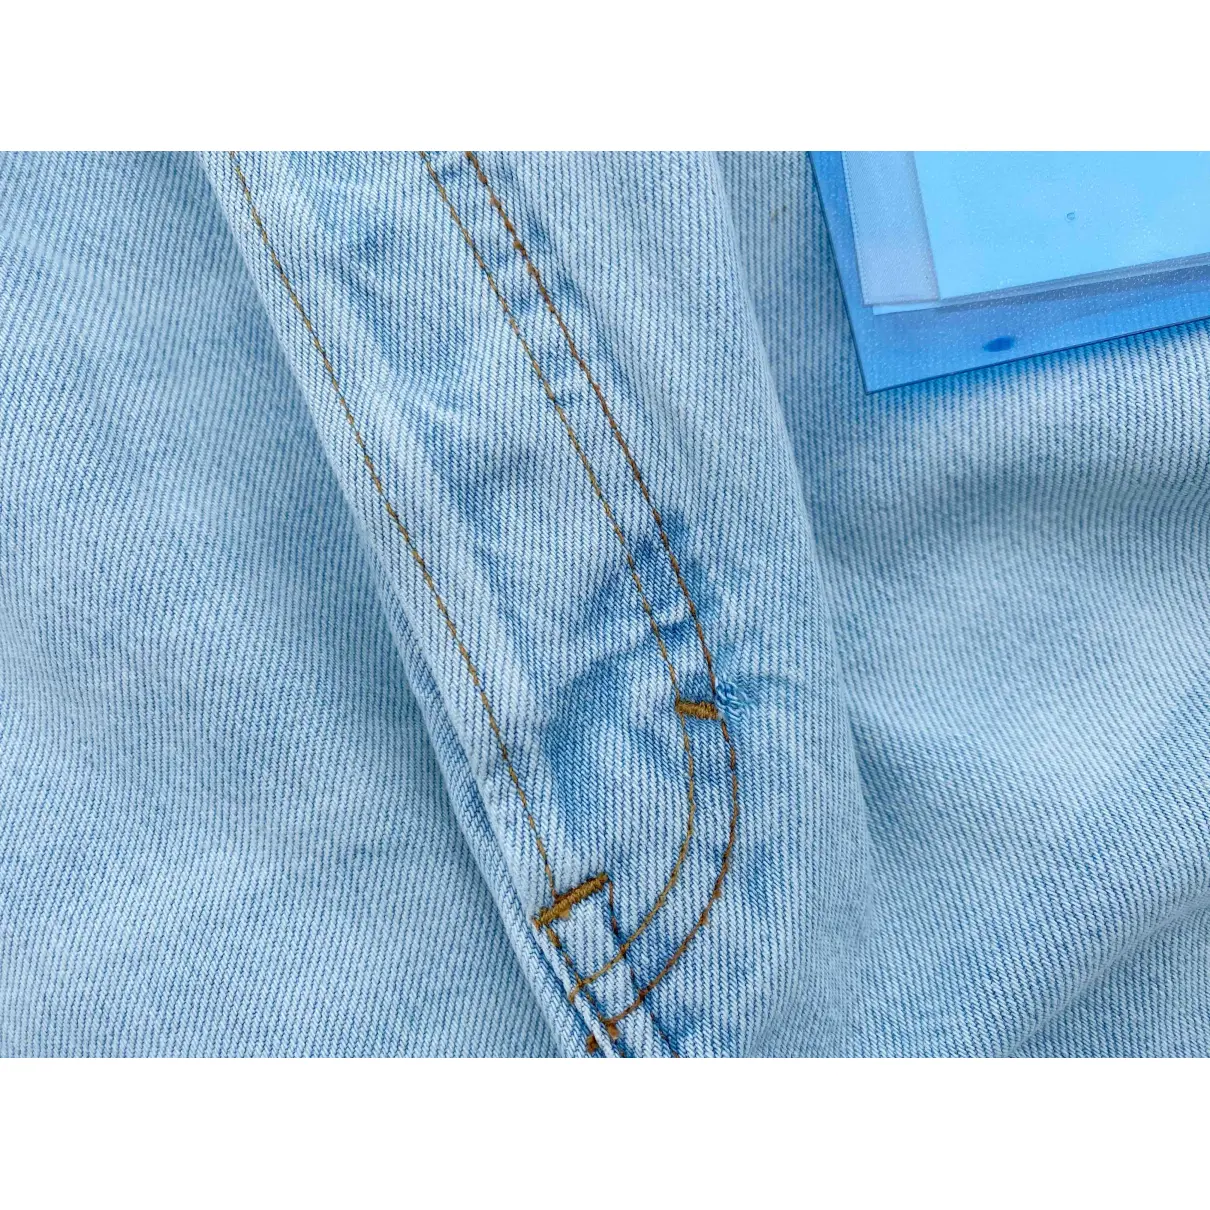 Blue Denim - Jeans Shorts Acne Studios